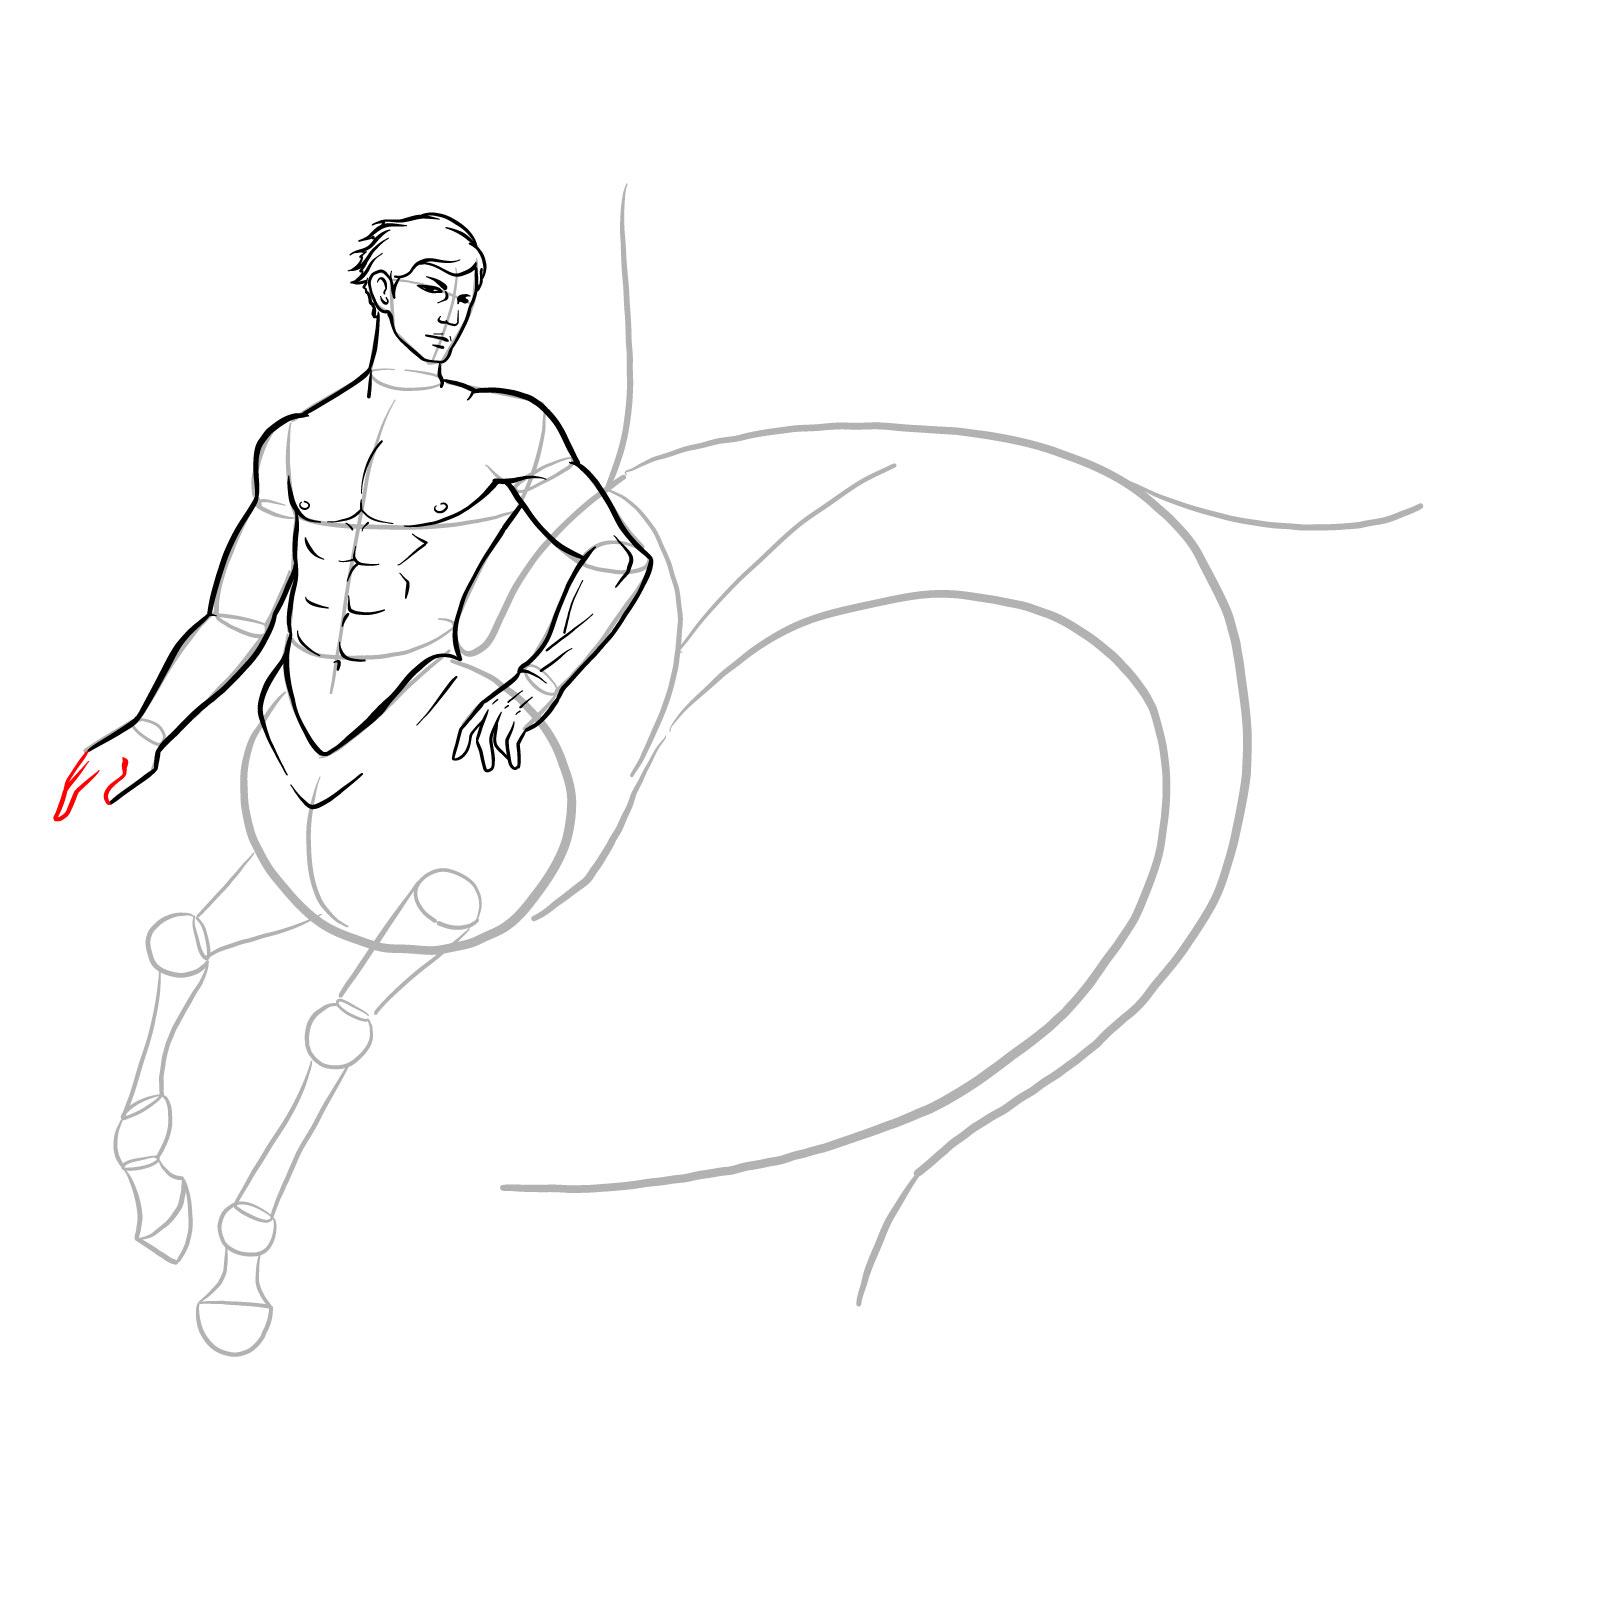 How to draw an Ichthyocentaur - step 22